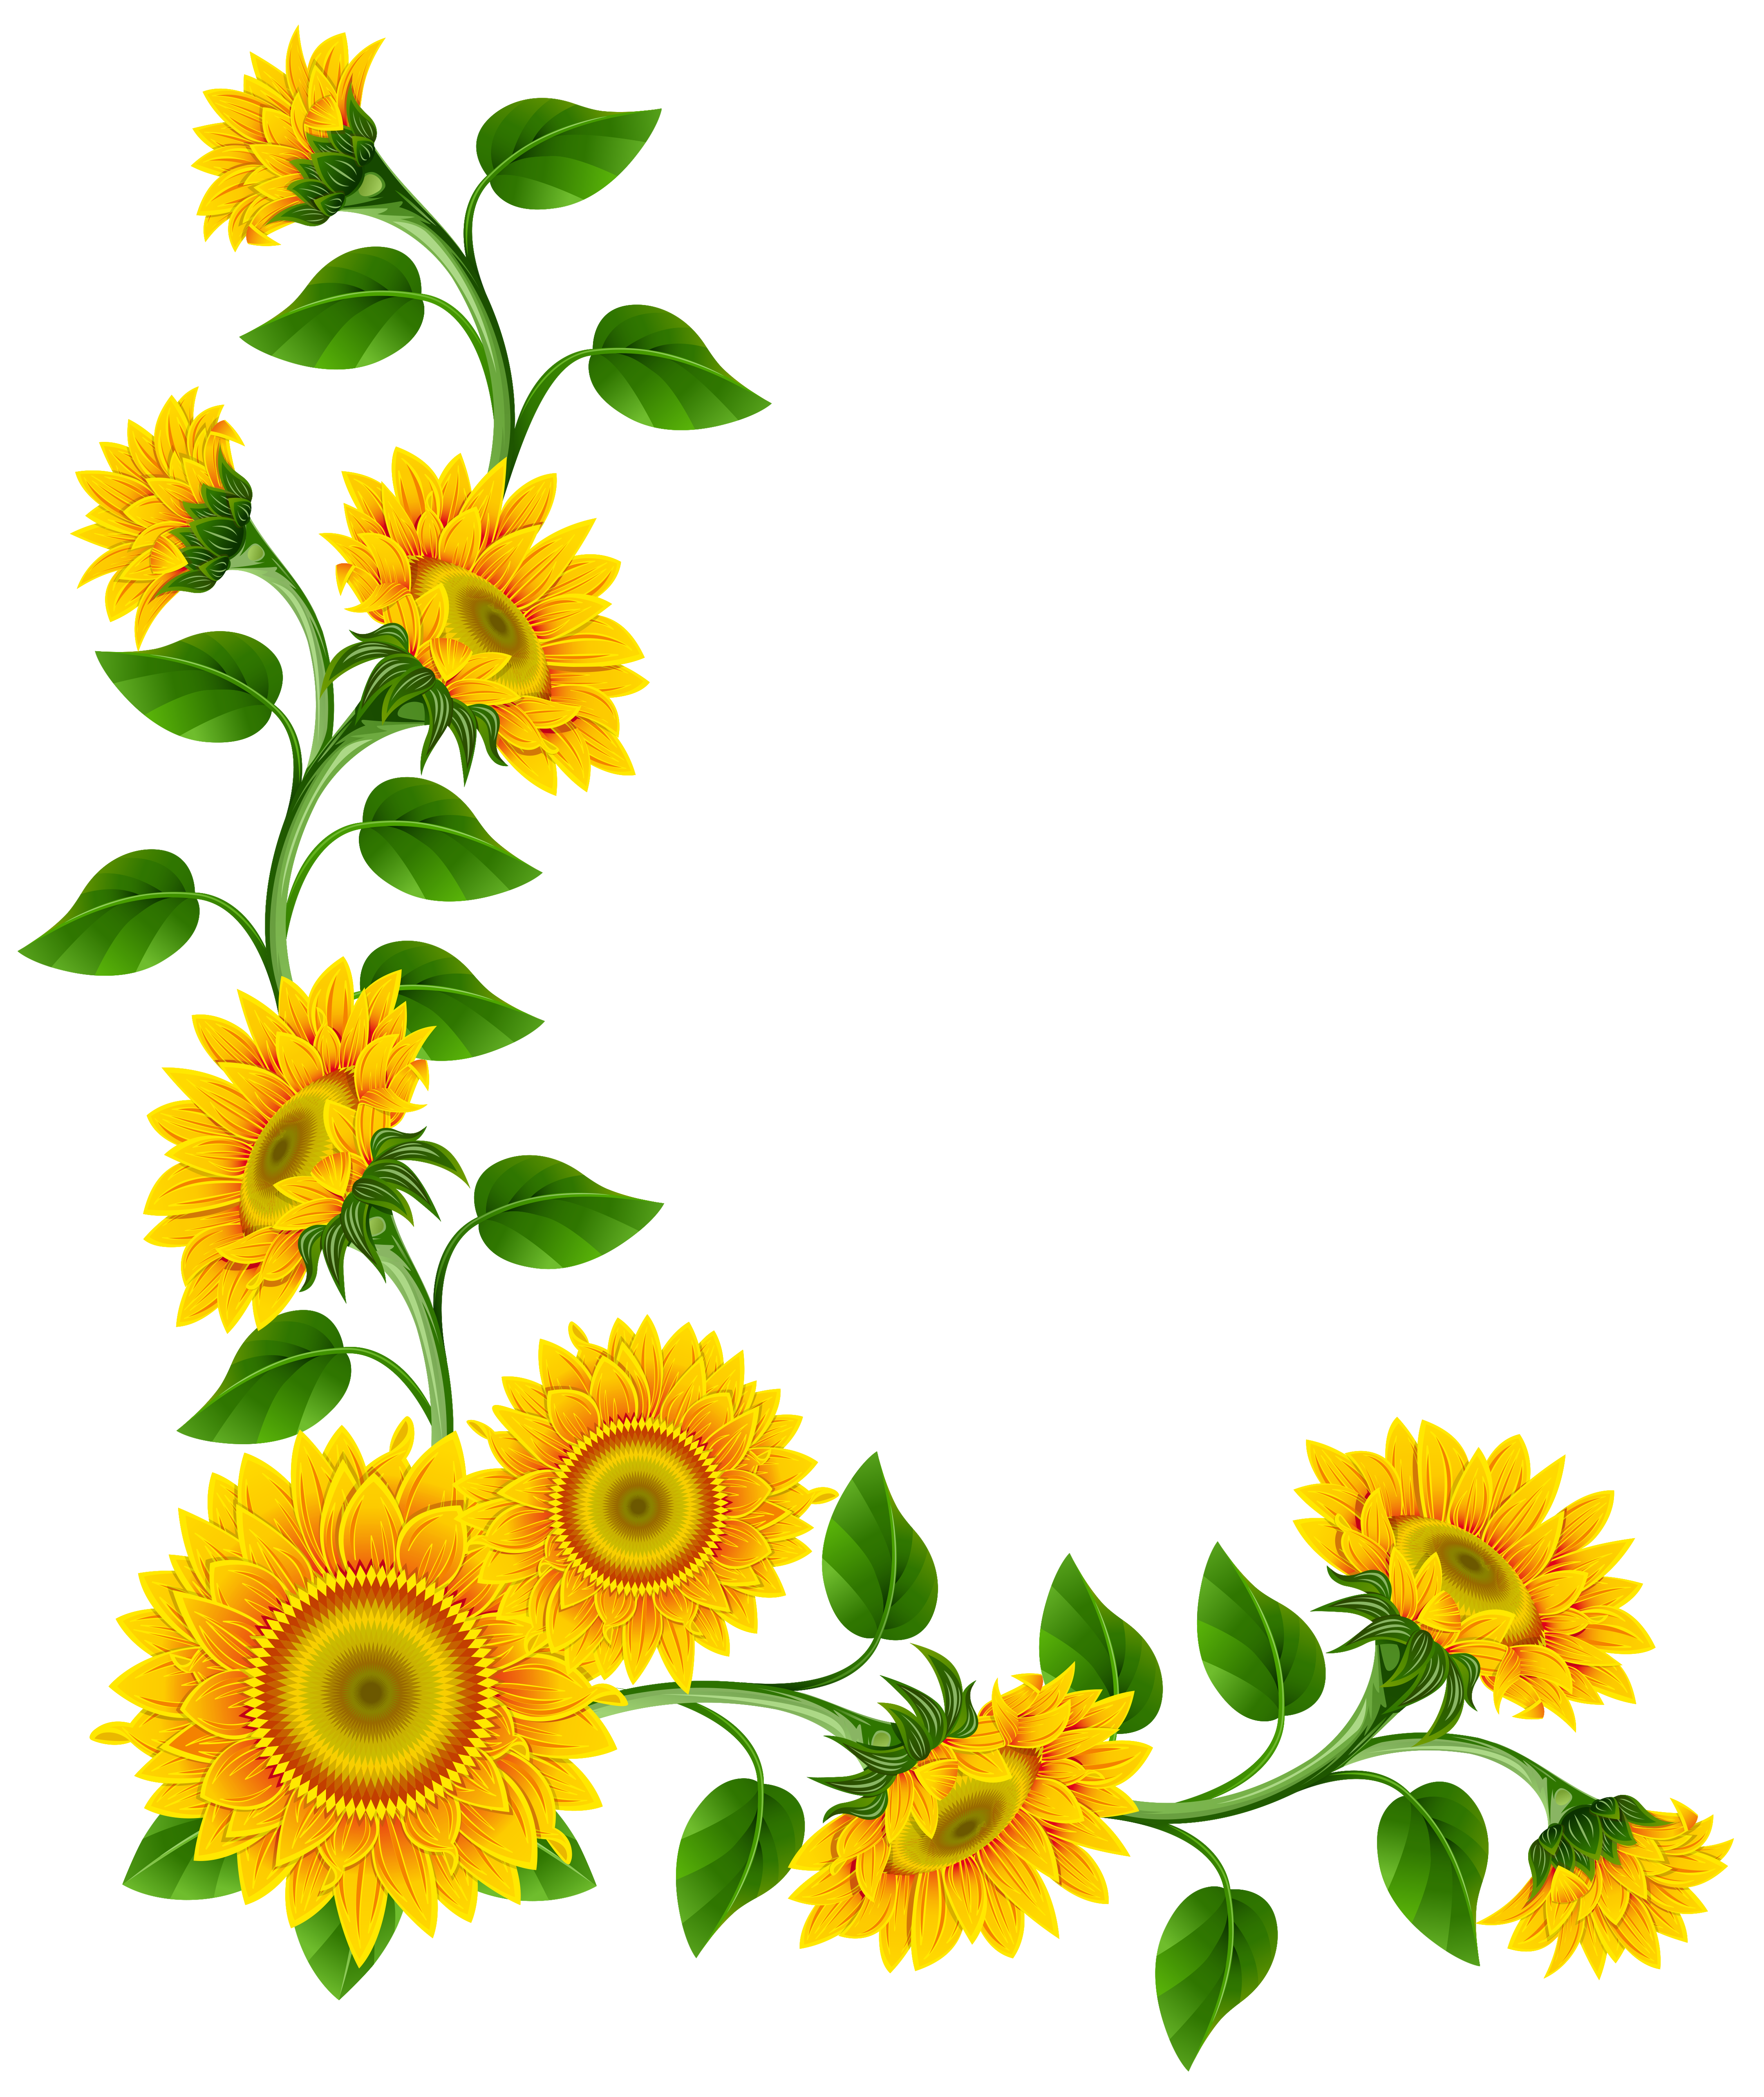 Garden clipart sunflower. Border decoration png image